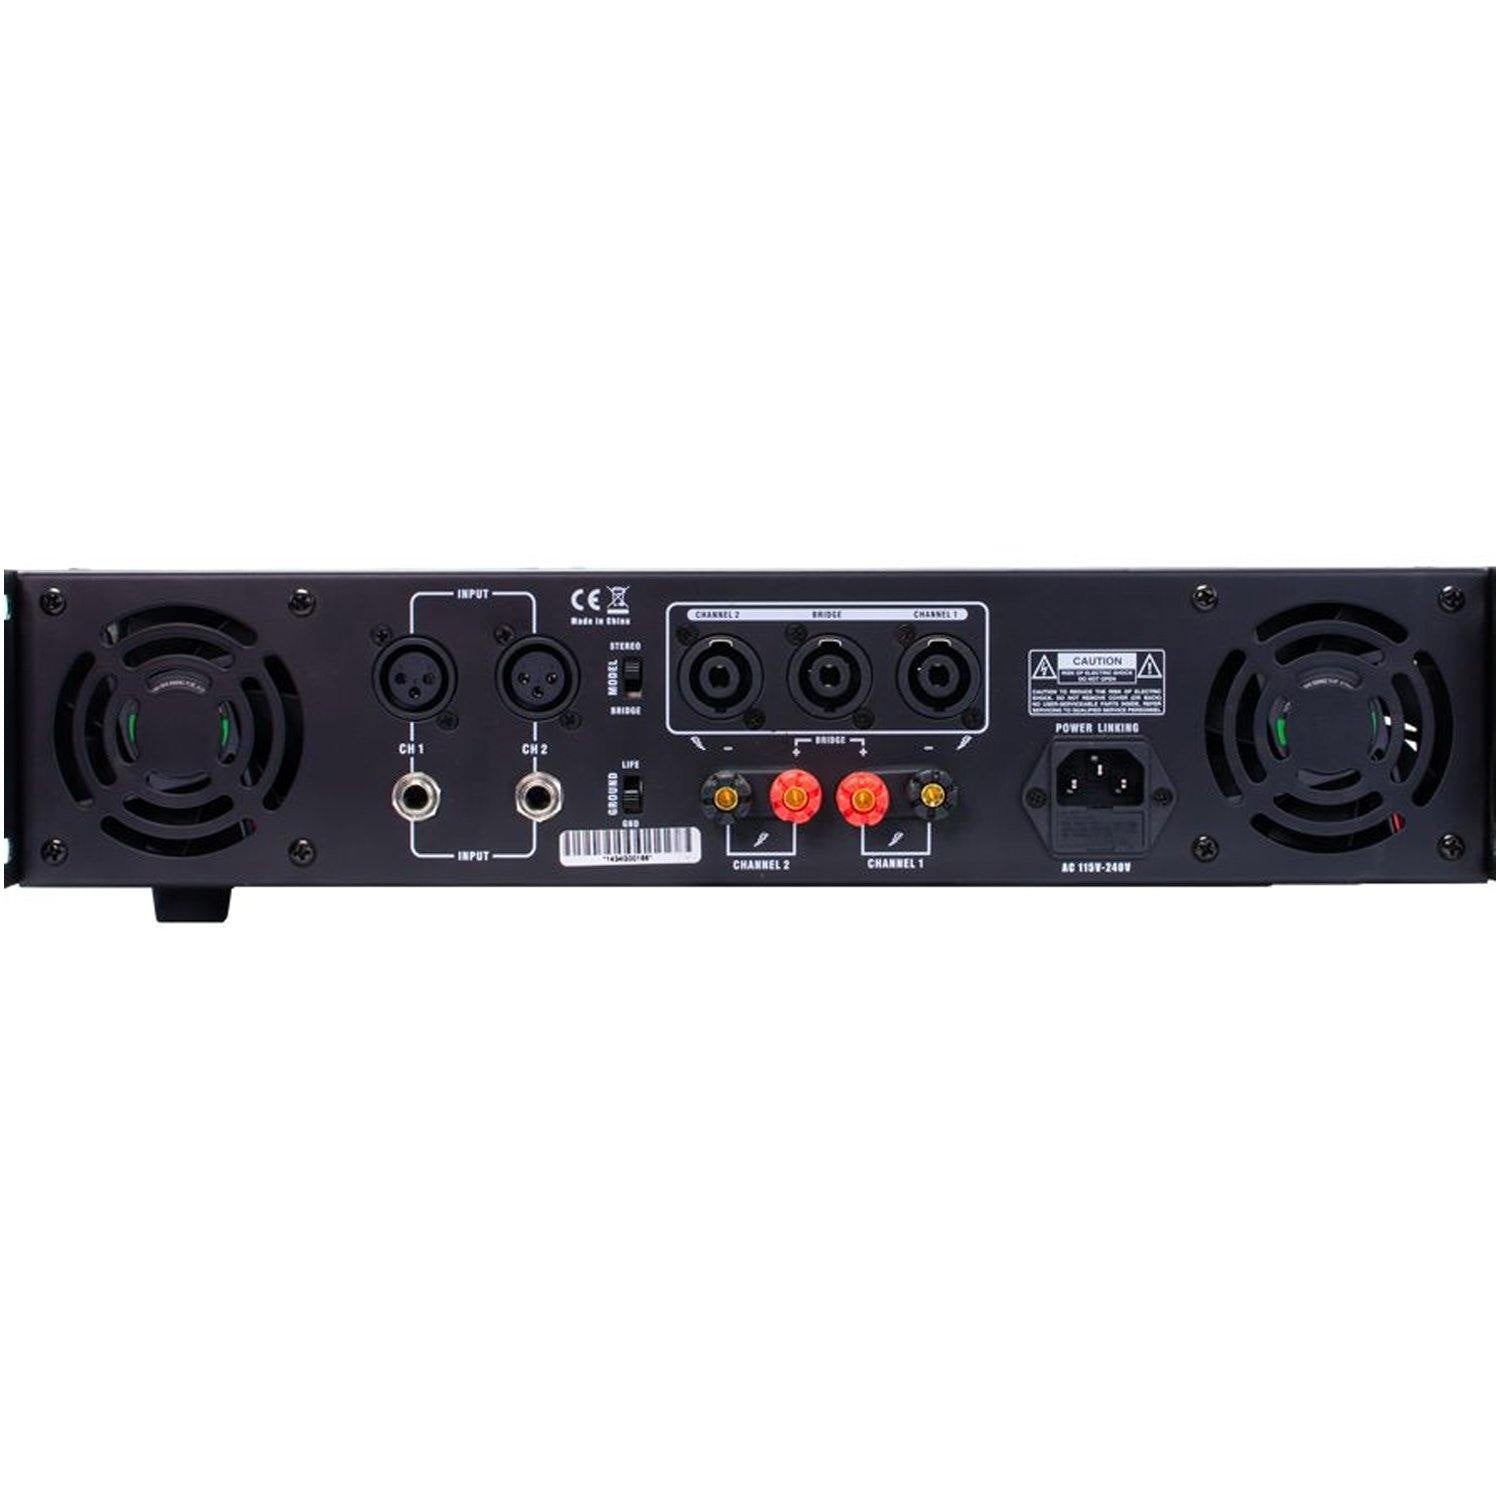 Gemini XGA-4000 Professional Power Amplifier 4000W - DY Pro Audio